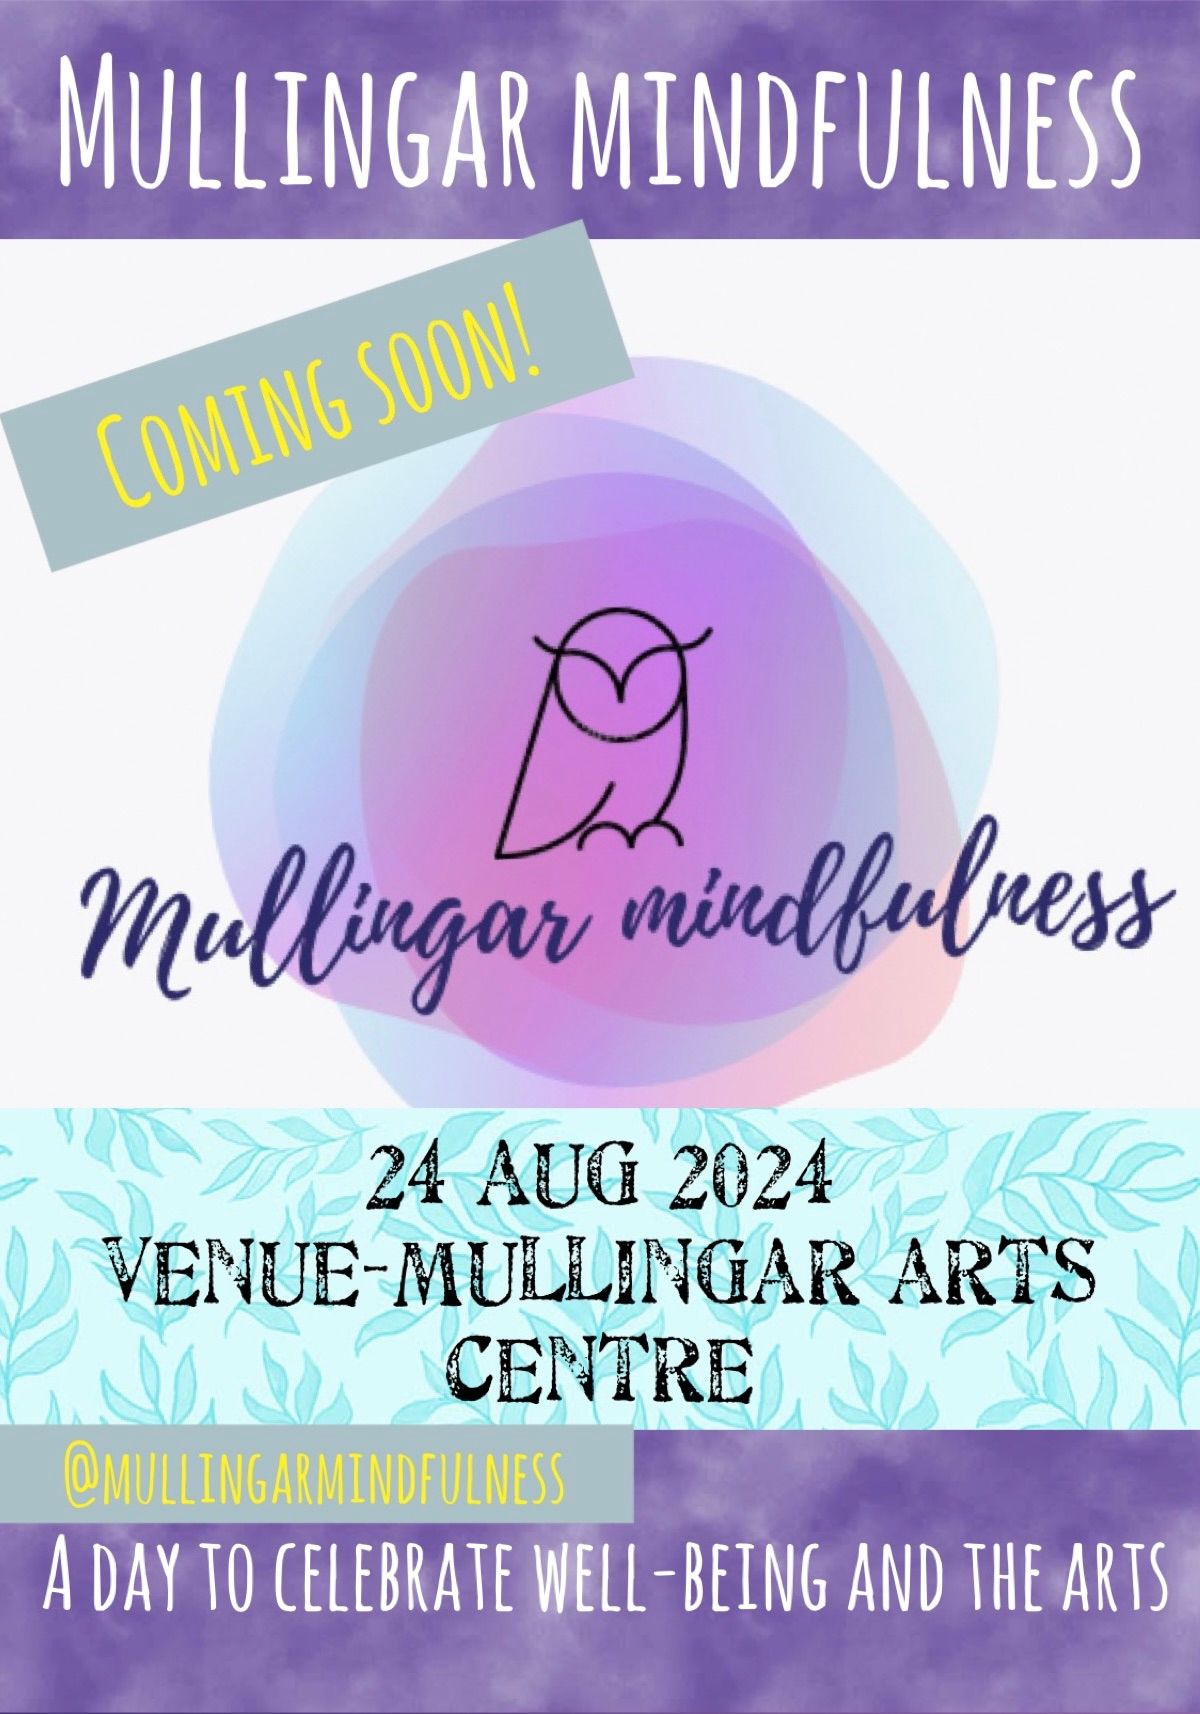 Mullingar Mindfulness 